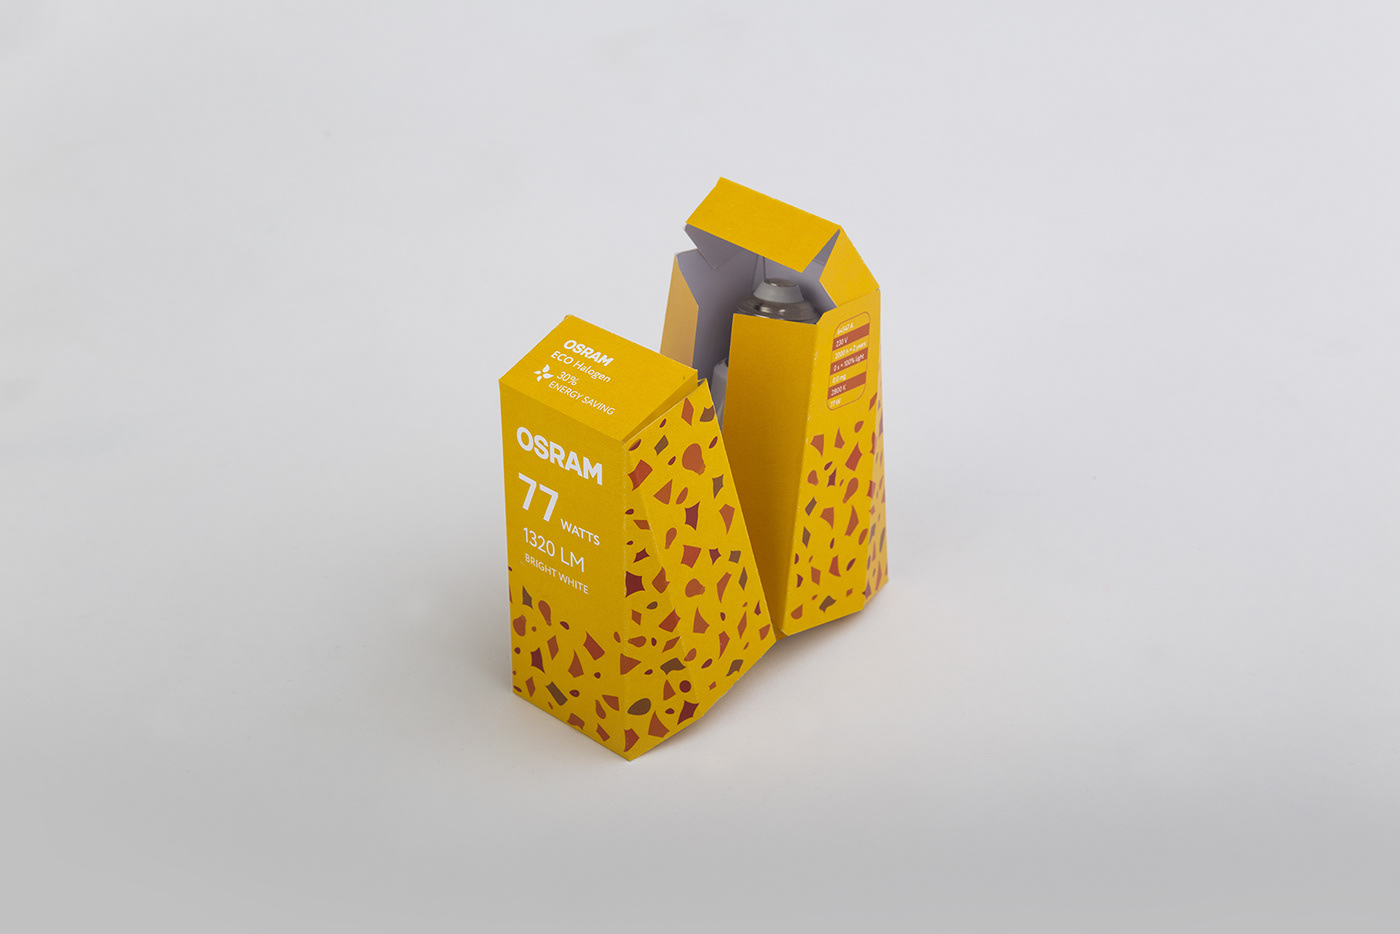 osram bulb packaging design double